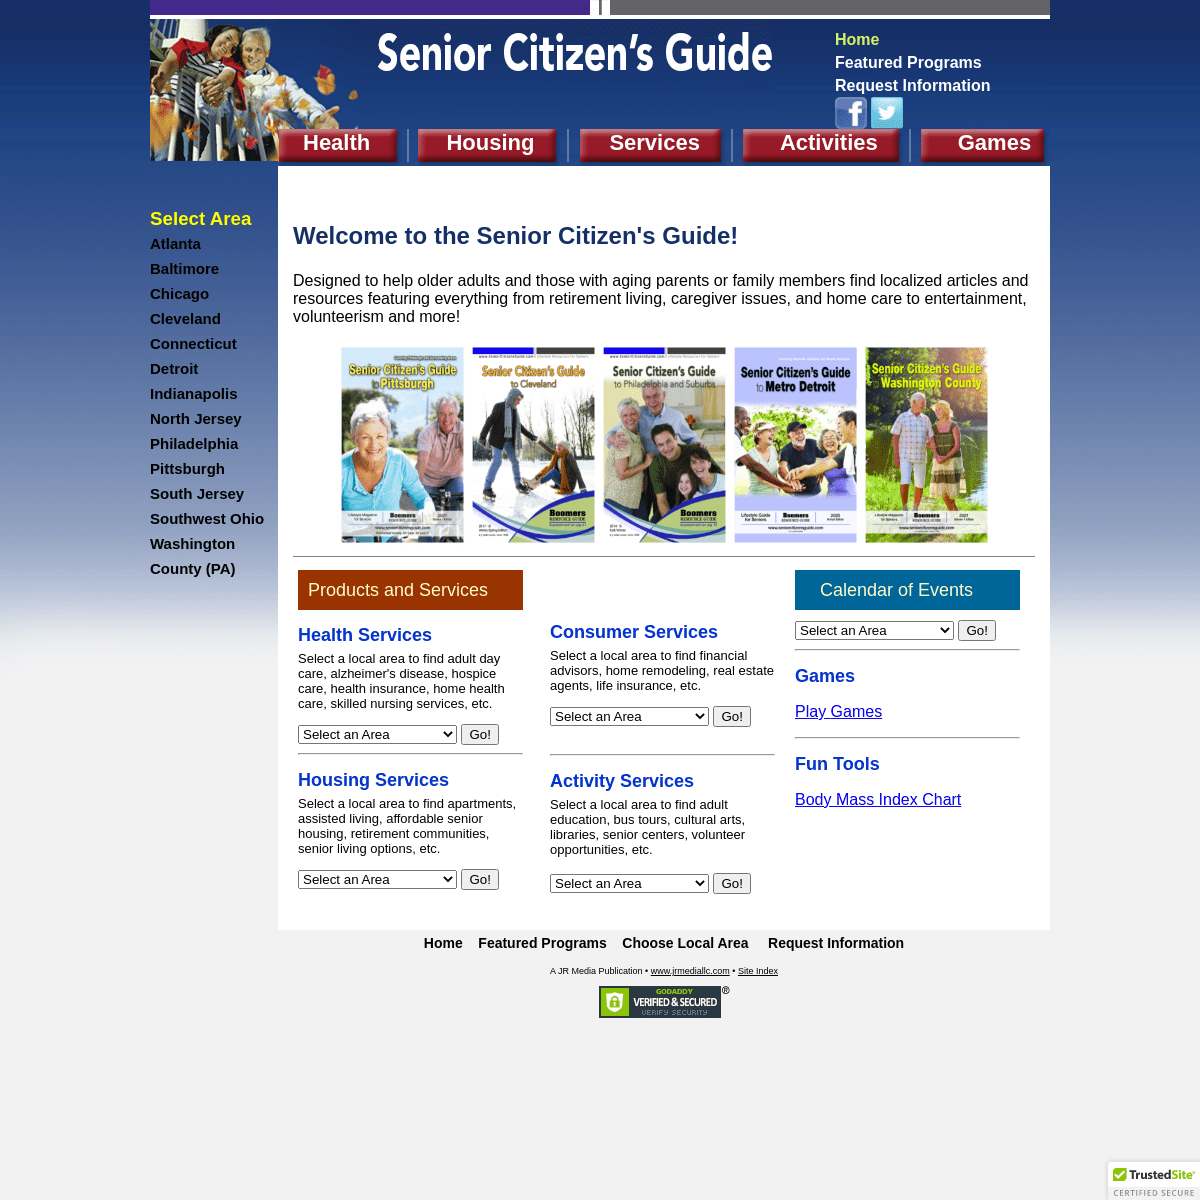 A complete backup of https://seniorcitizensguide.com